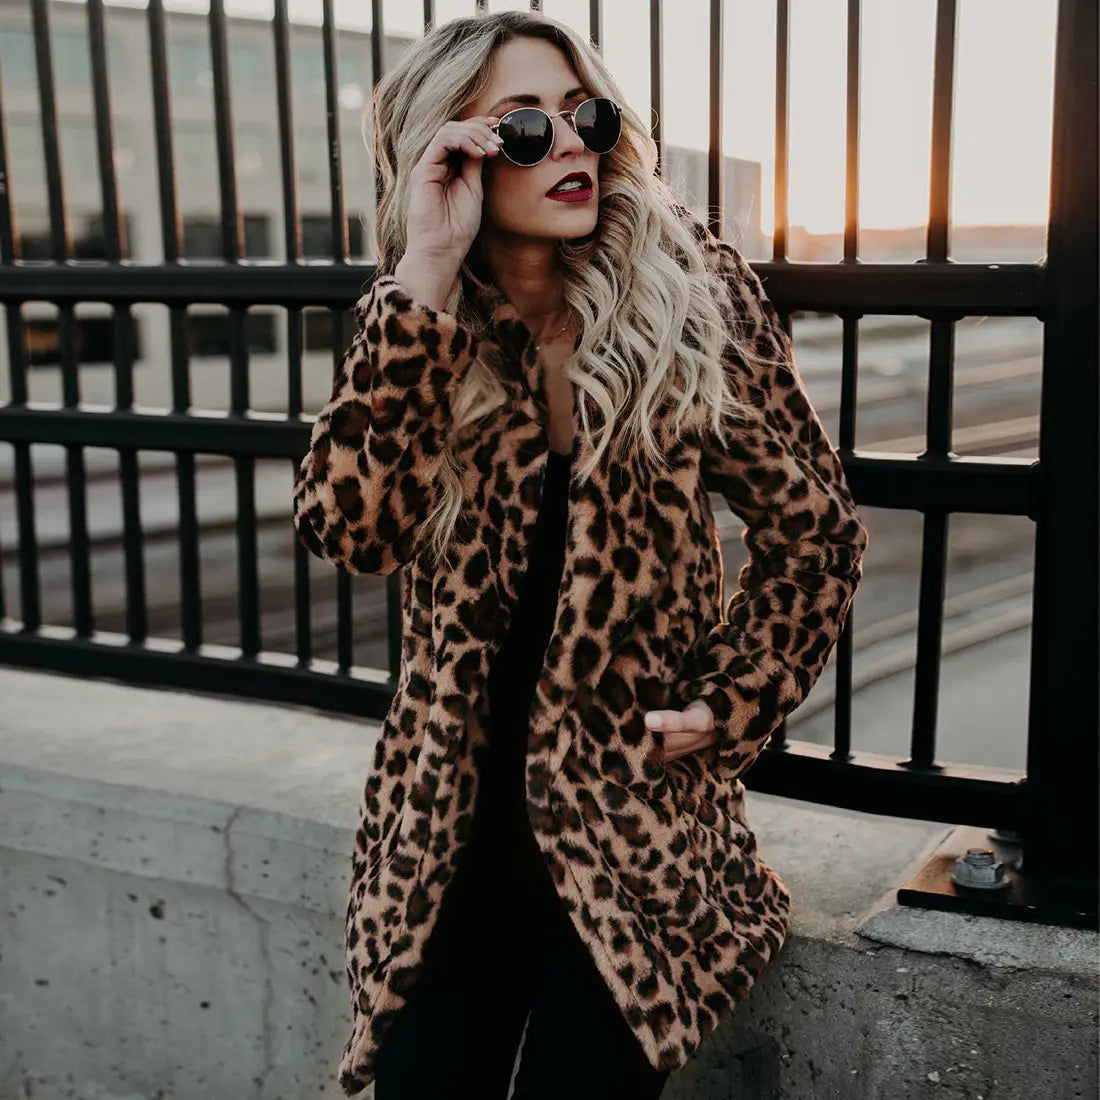 Lovemi - Artificial Faux Fur Women Winter Coat